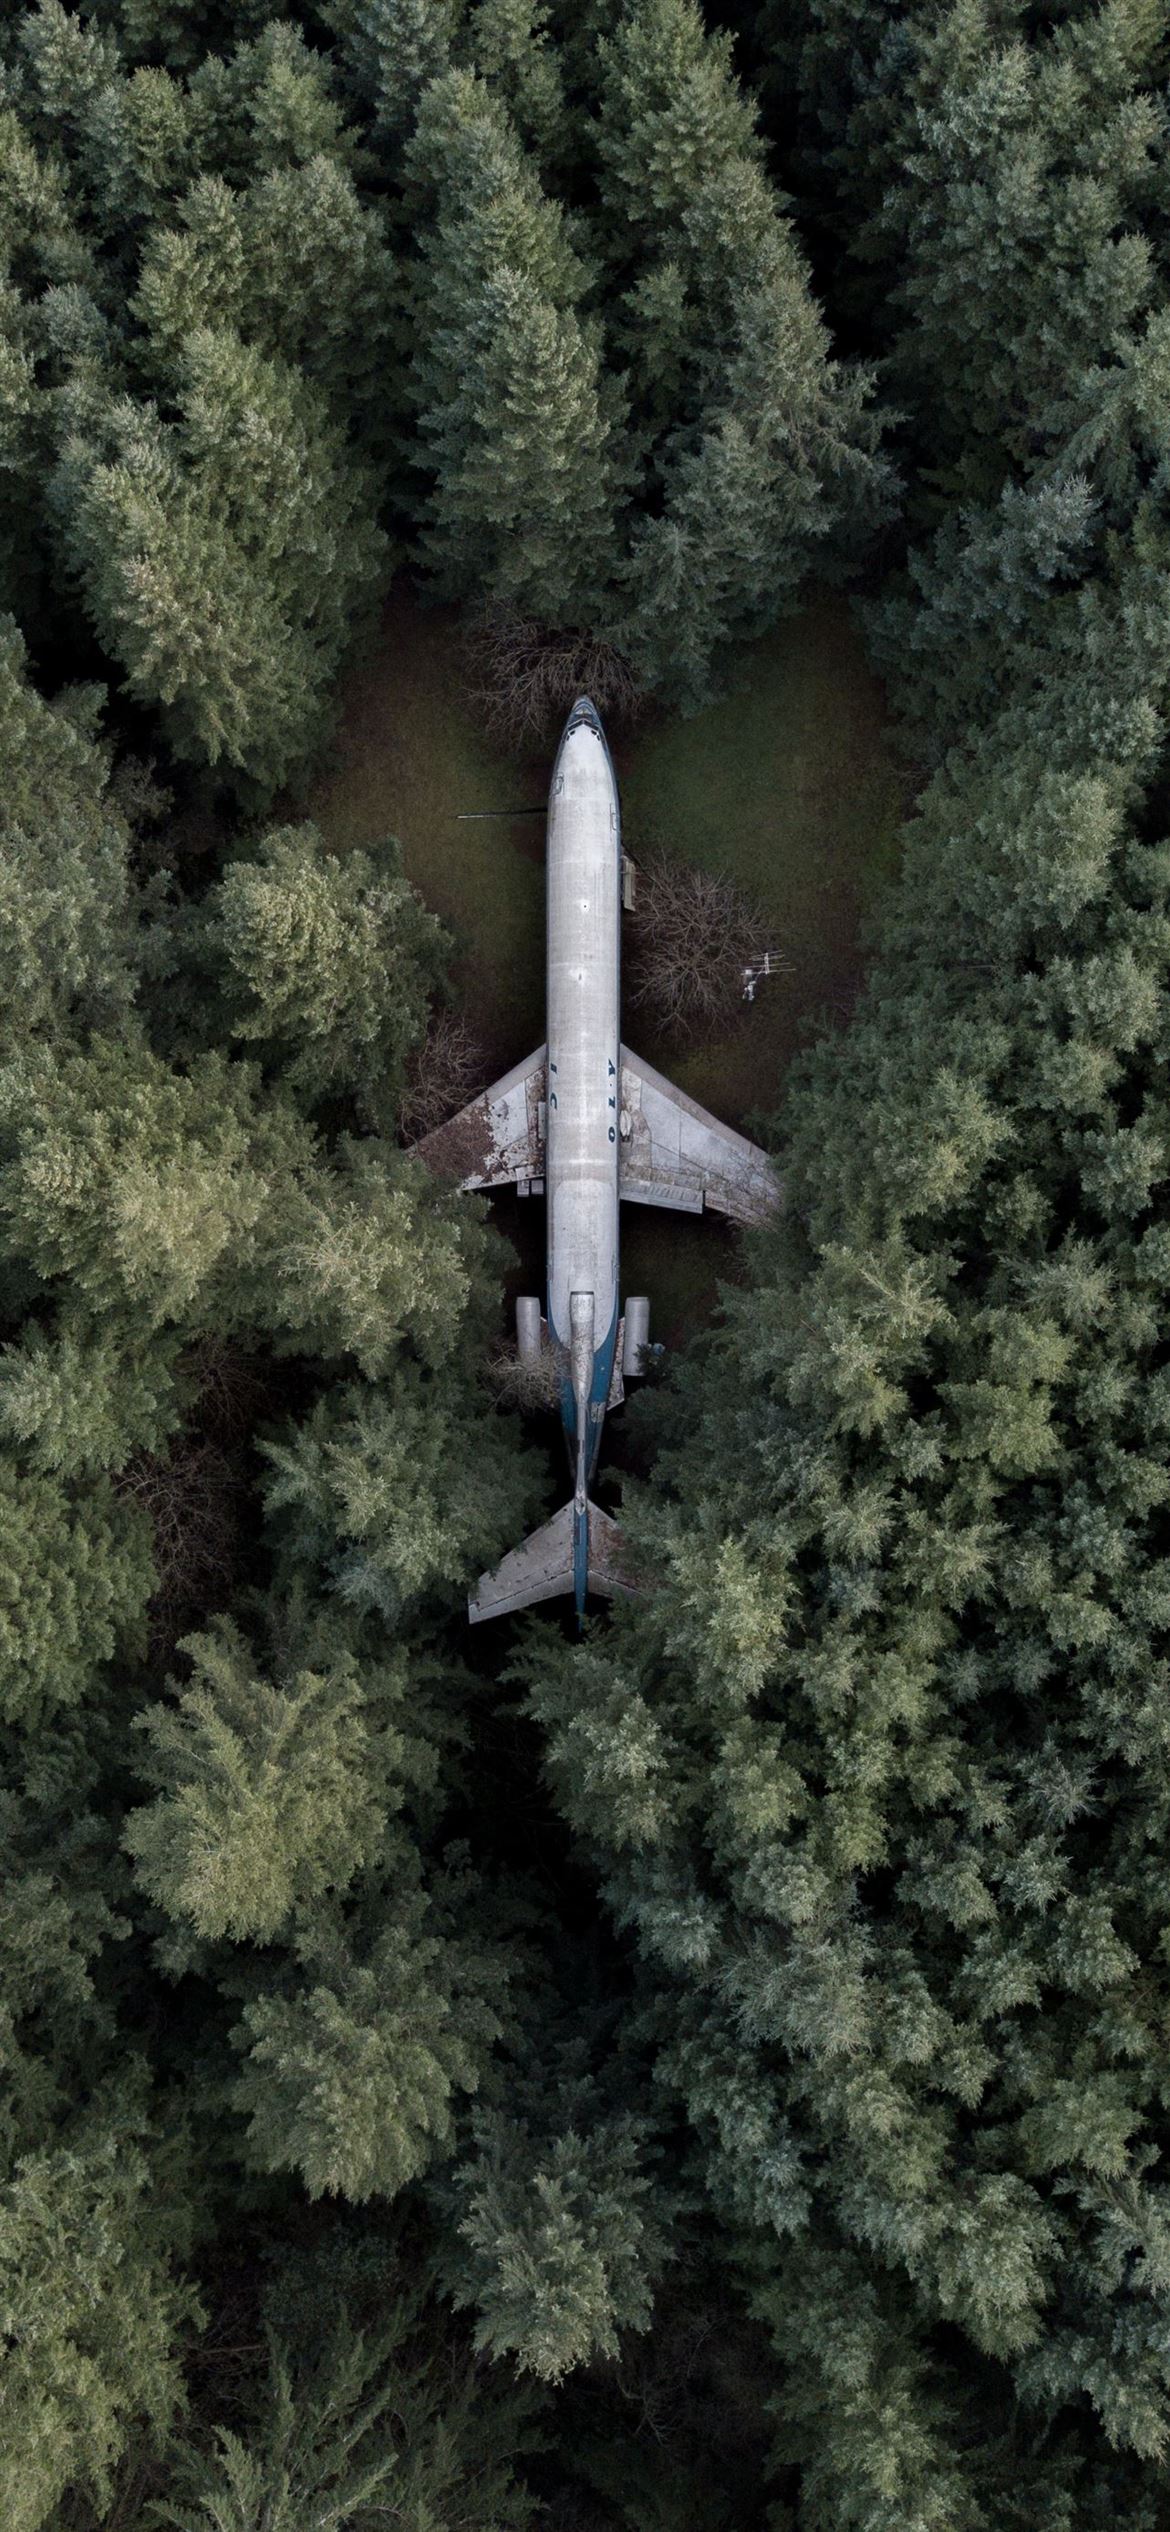 Airplane Wallpaper